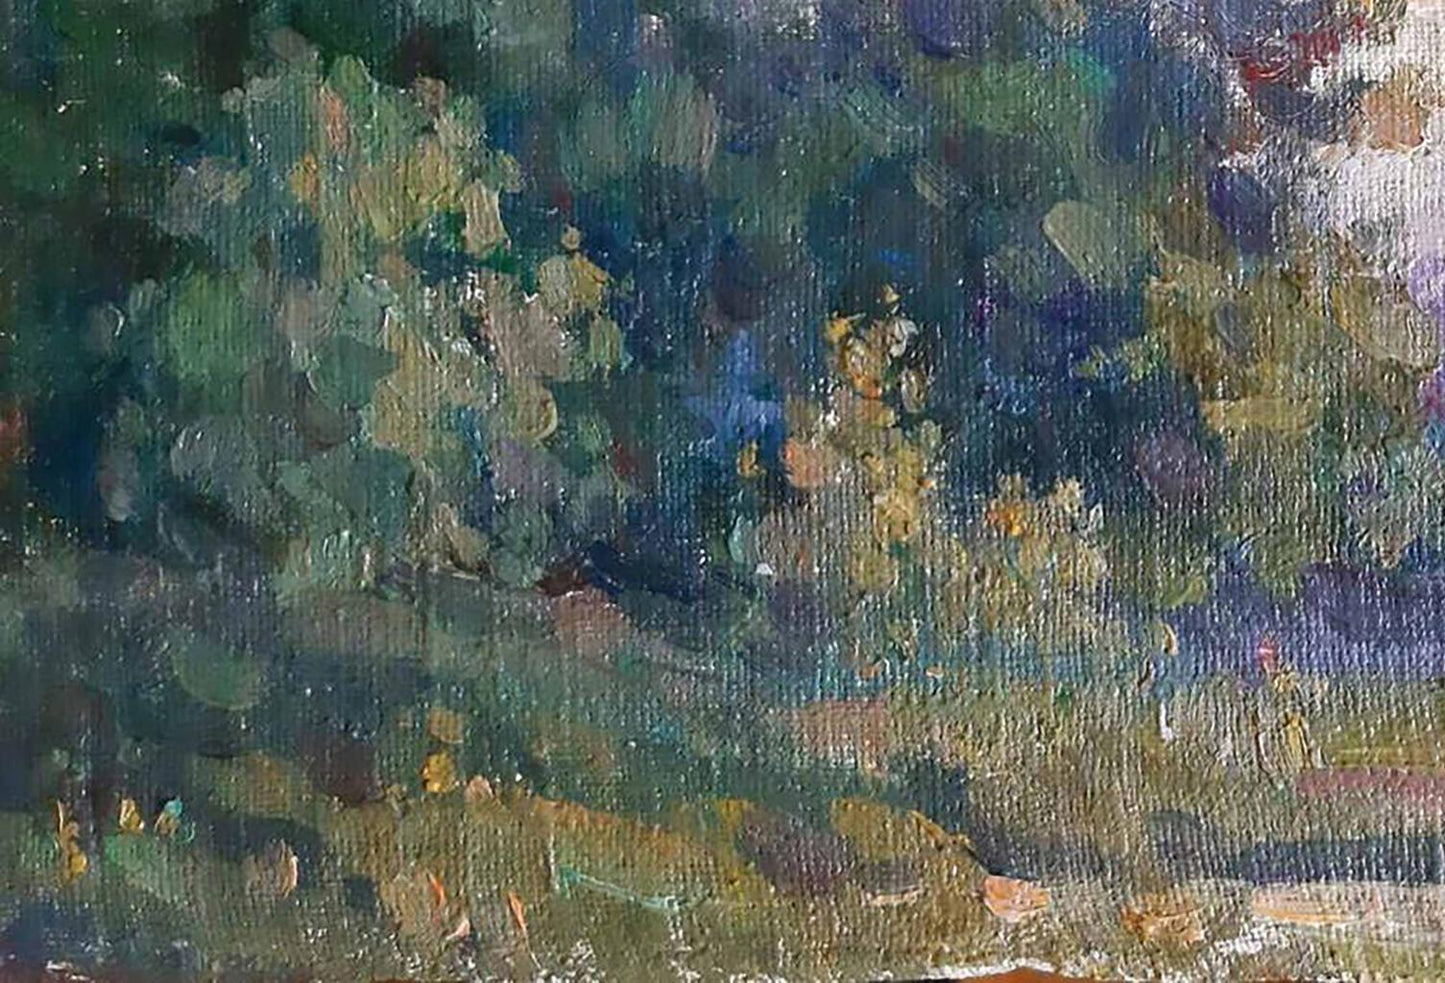 Oil painting Evening landscape Kovalenko Ivan Mikhailovich